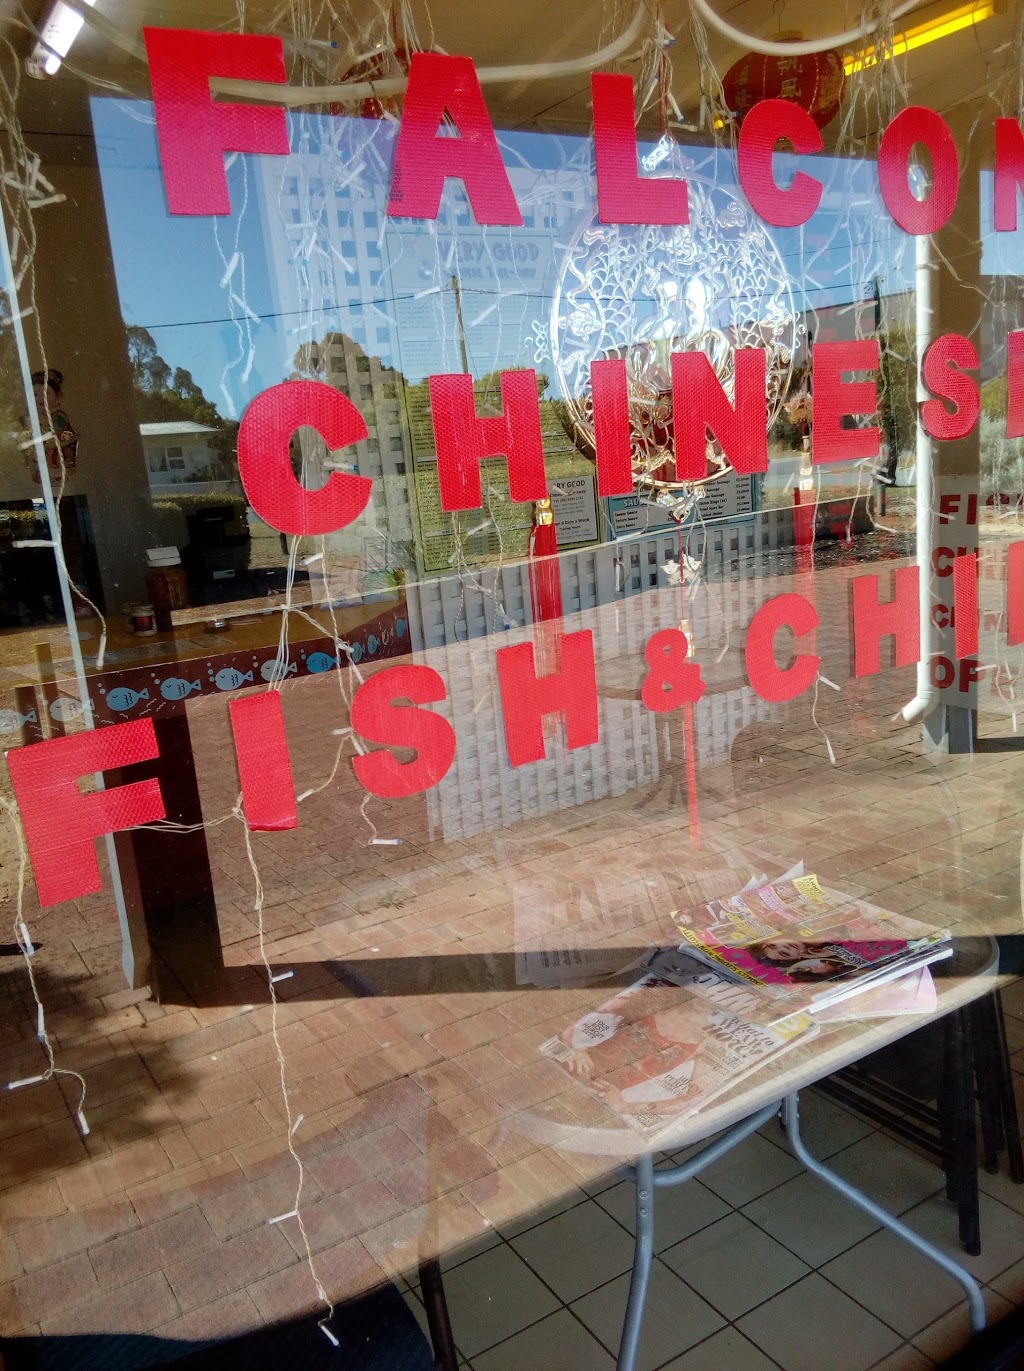 Falcon Chinese Takeaway & fish&chips | Australia, Western Australia, Falcon, Baroy St, Shop1邮政编码: 6210 | Phone: 0434 681 893